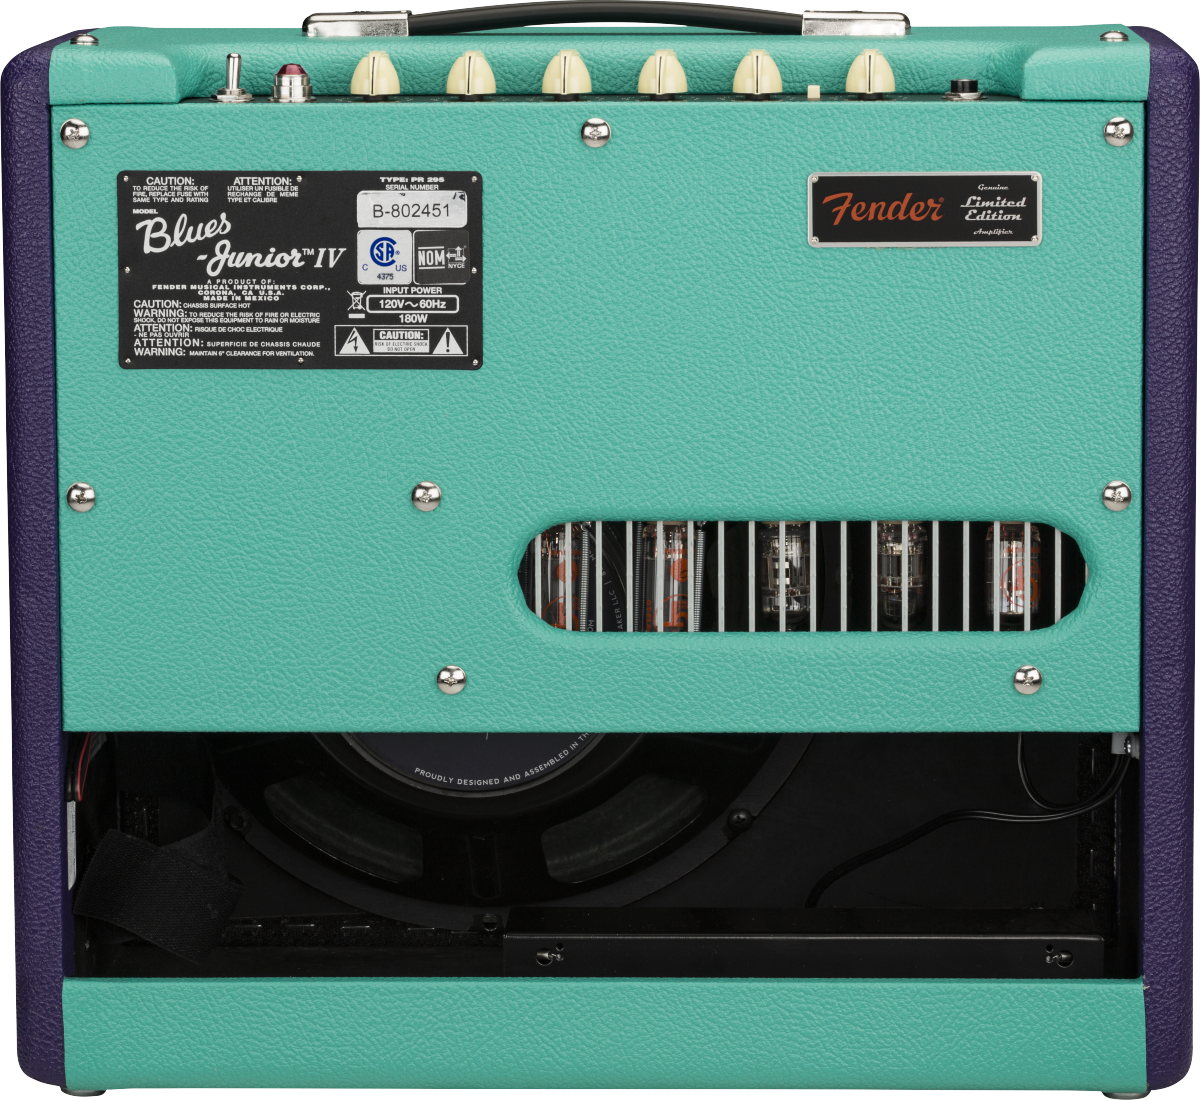 Fender Blues Junior Iv Fsr Ltd 15w 1x12 Jensen Cannabis Rex Purple Seafoam - Combo amplificador para guitarra eléctrica - Variation 1